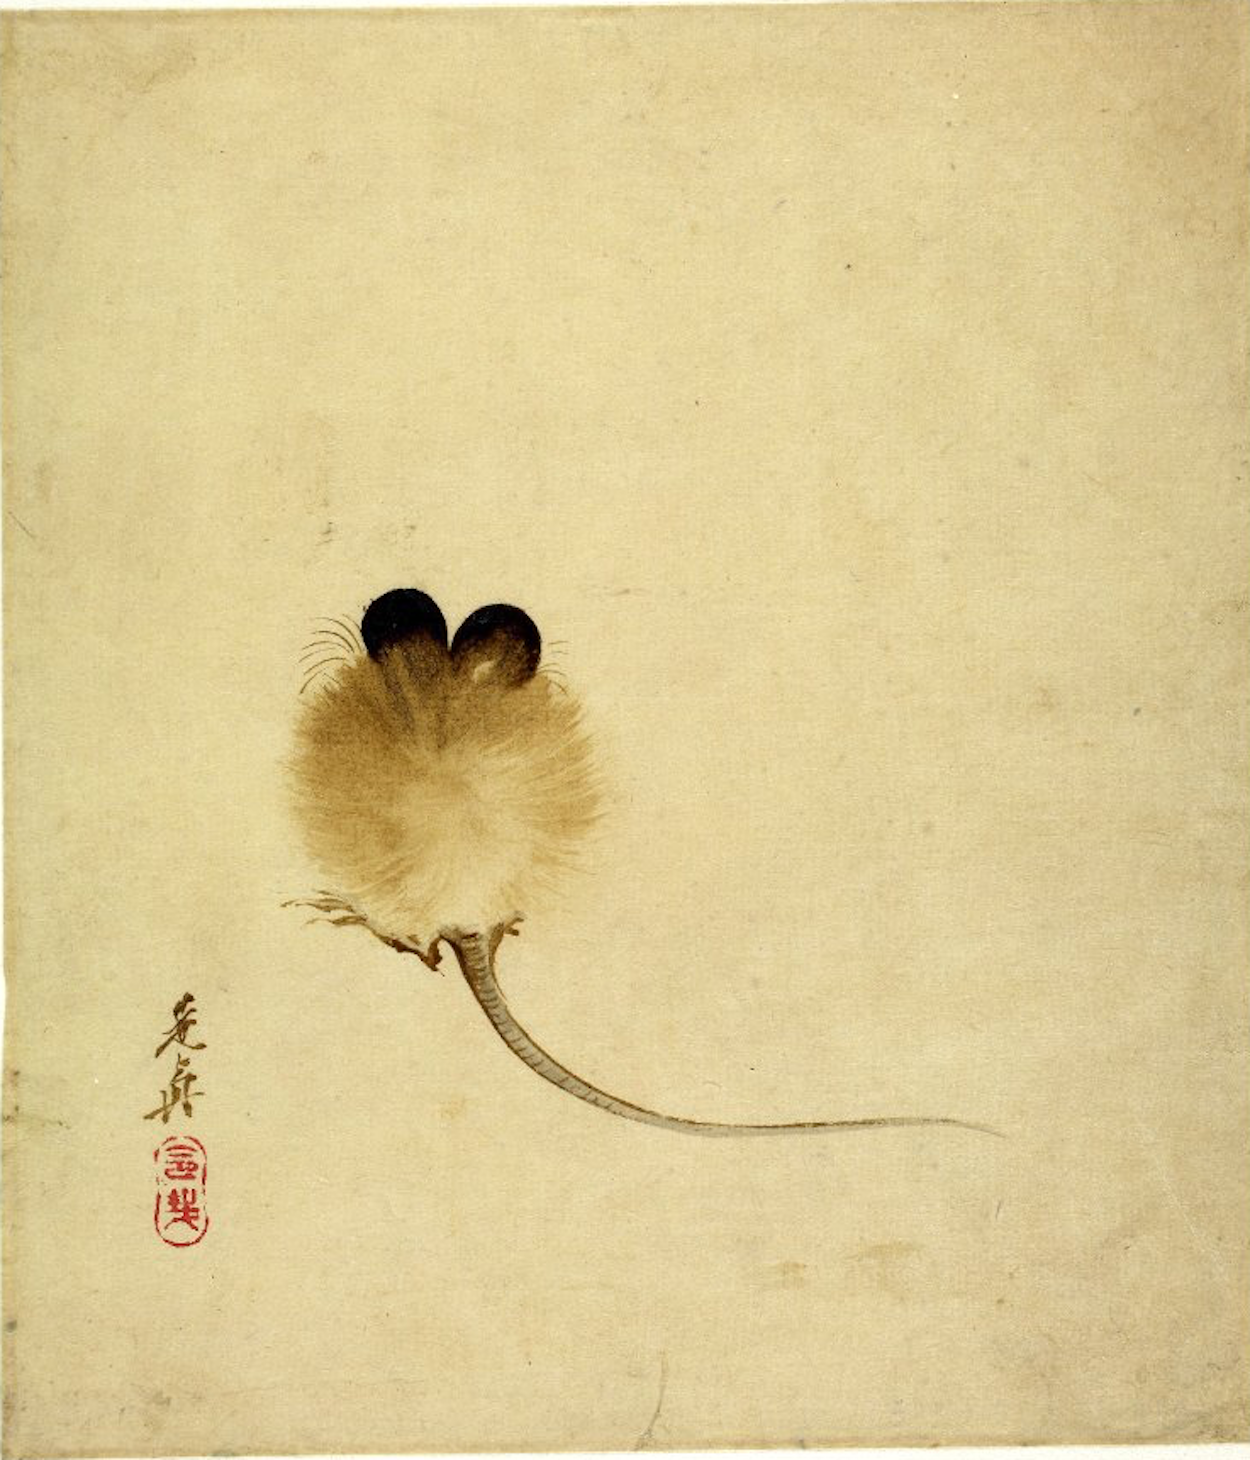 الفأر by Shibata Zeshin - 19th century - 19.4 x 16.8 cm 